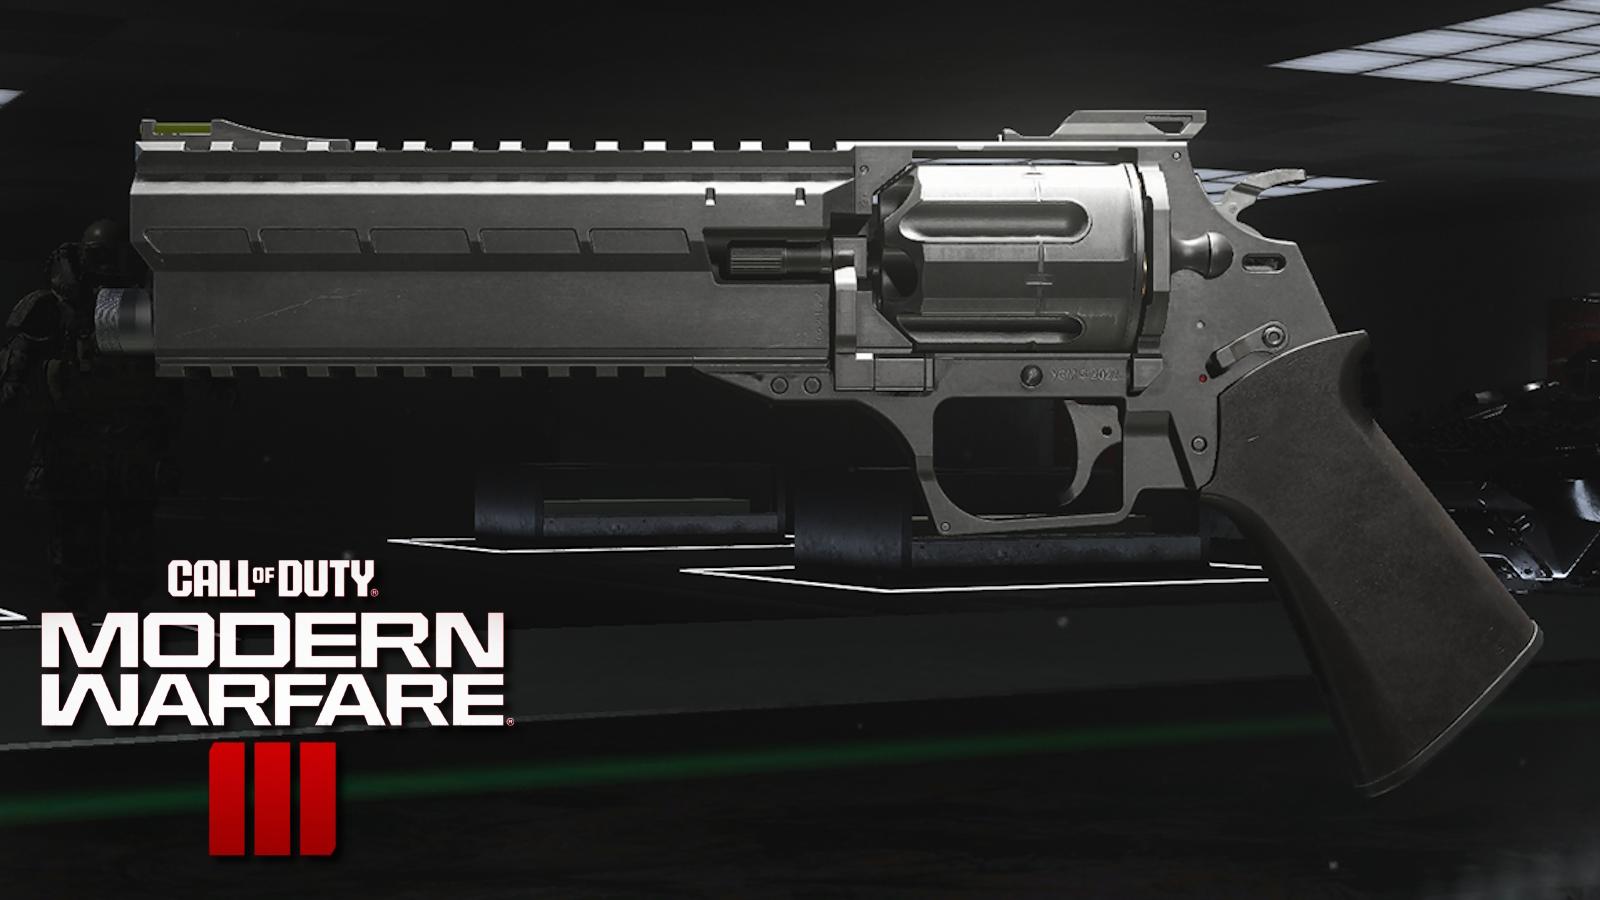 DM56 handgun pistol in Modern Warfare 3.